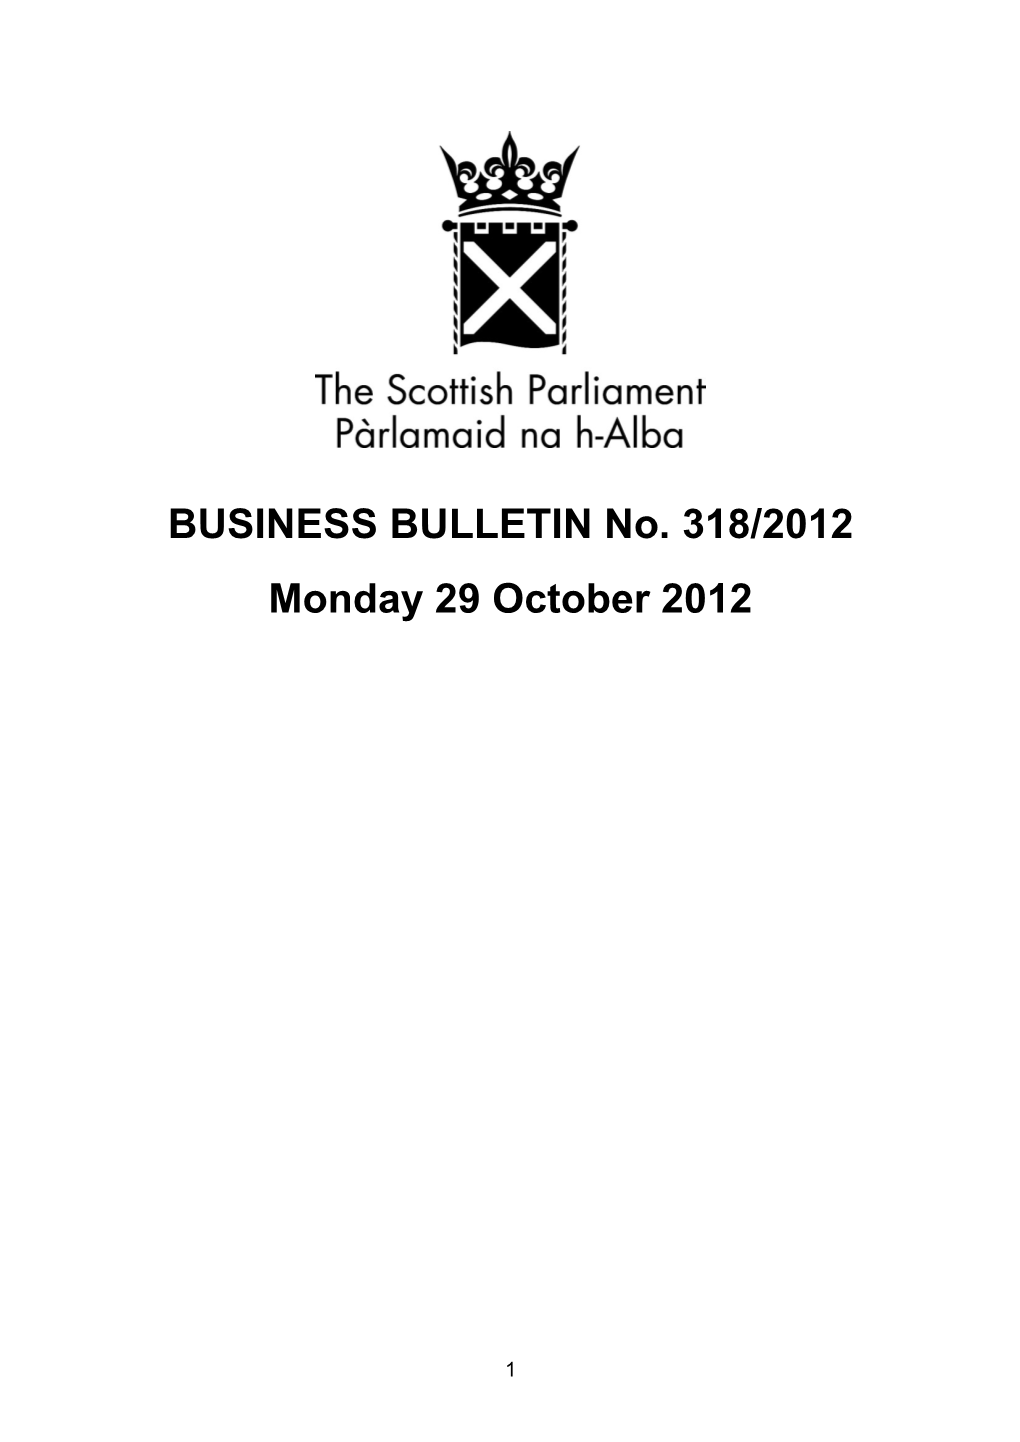 BUSINESS BULLETIN No. 318/2012 Monday 29 October 2012